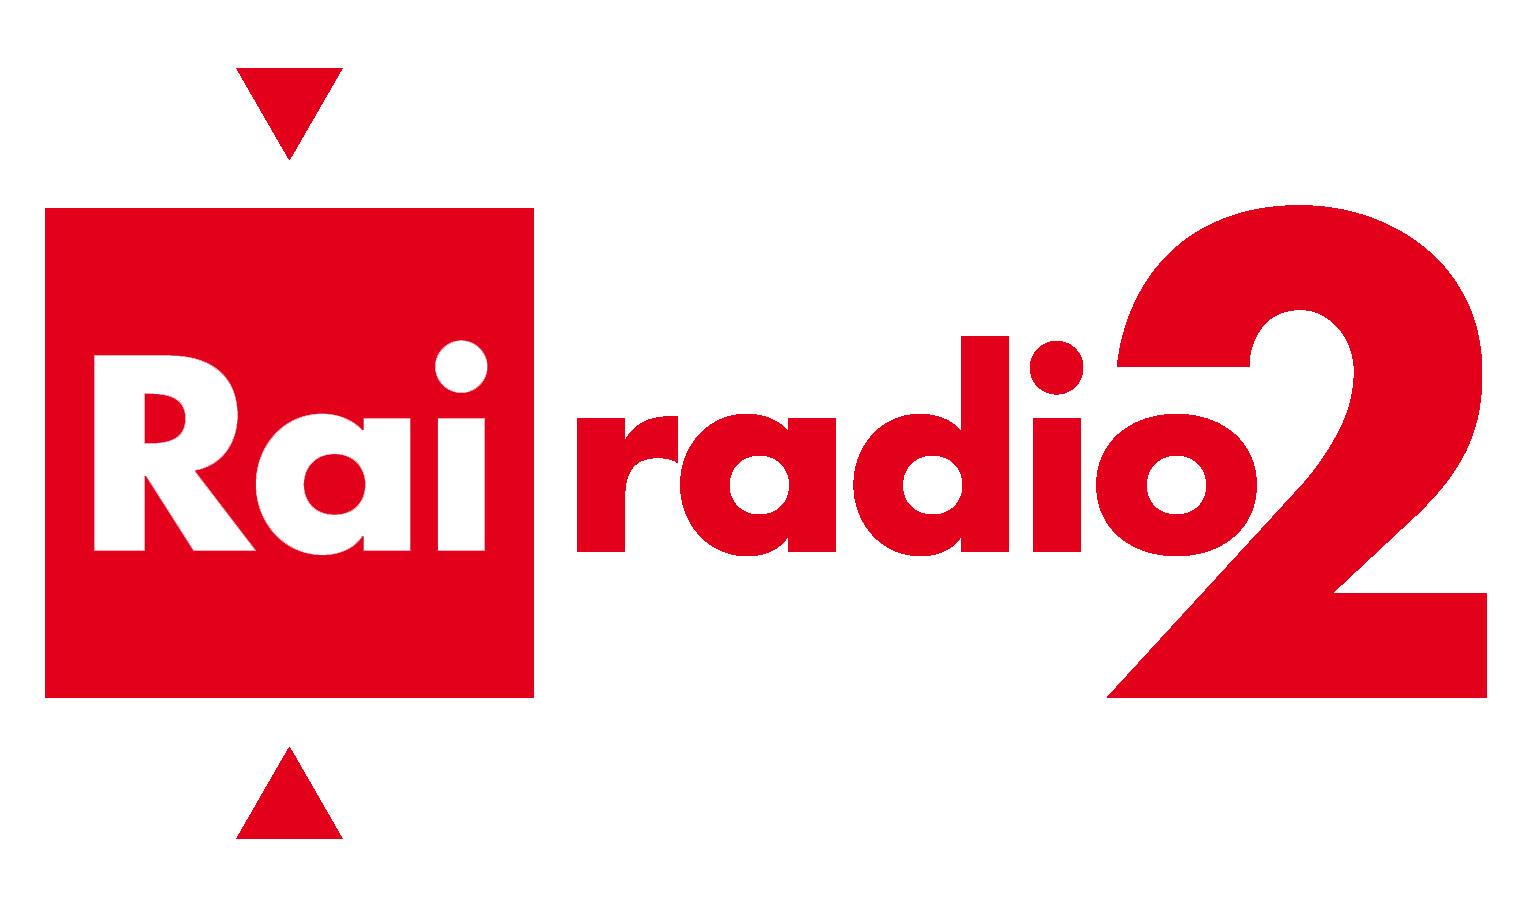 Rai radio 2